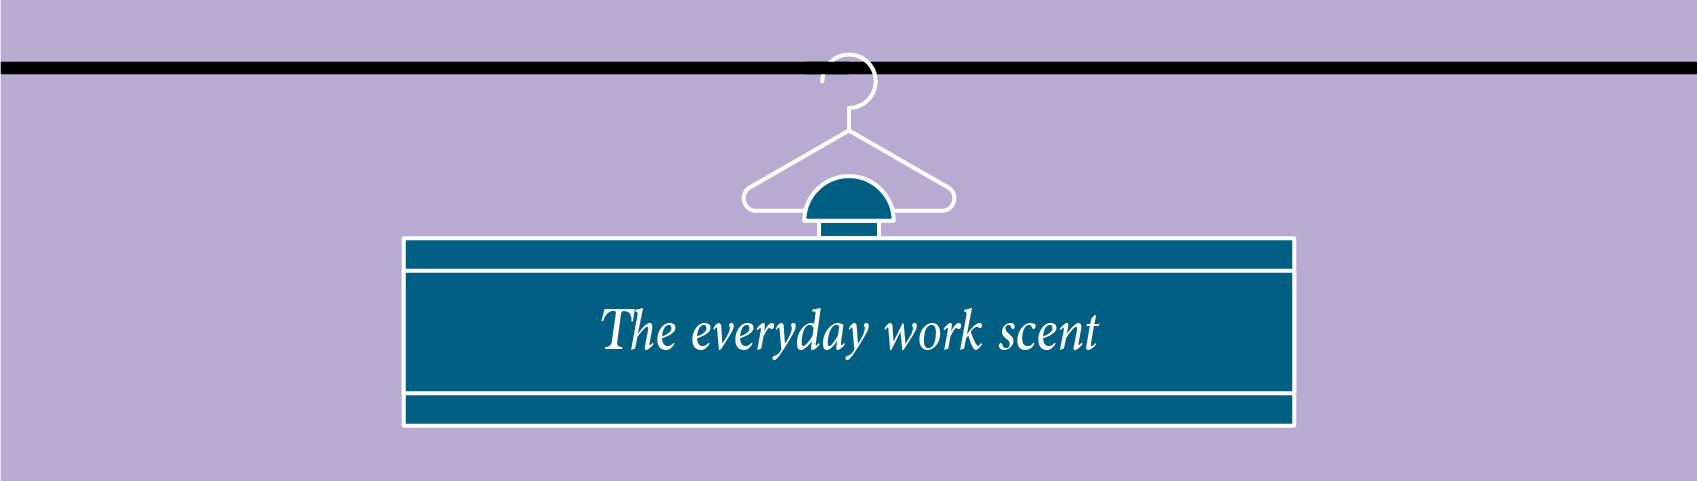 illustration of perfume bottle on a coat hanger the everyday work scent